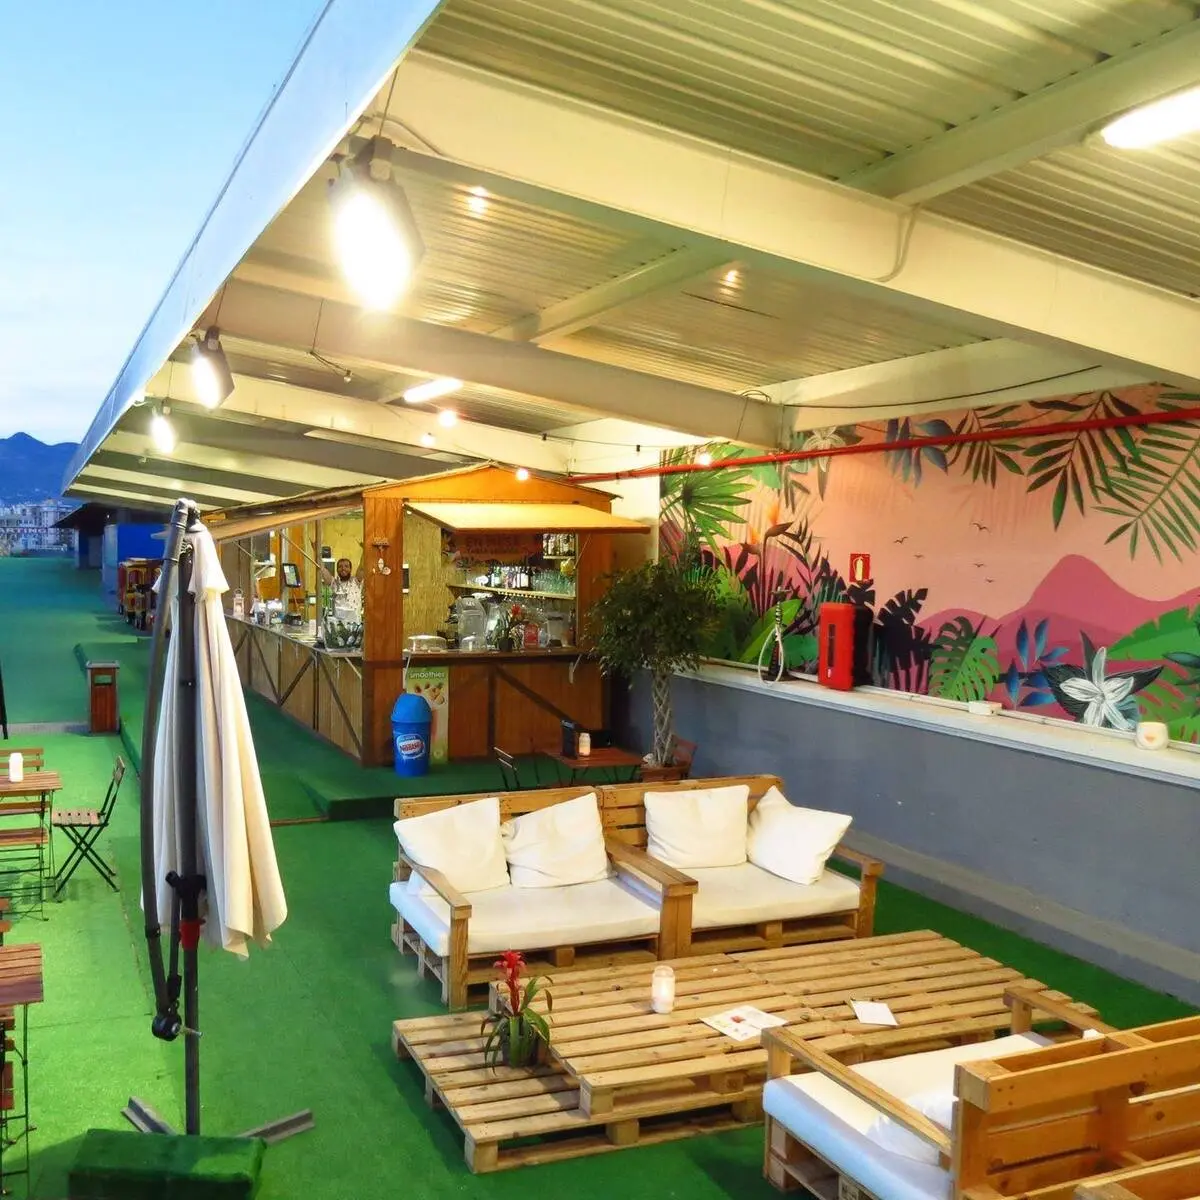 Terraza Chill Out Bar, espacio de relax y copas excepcional